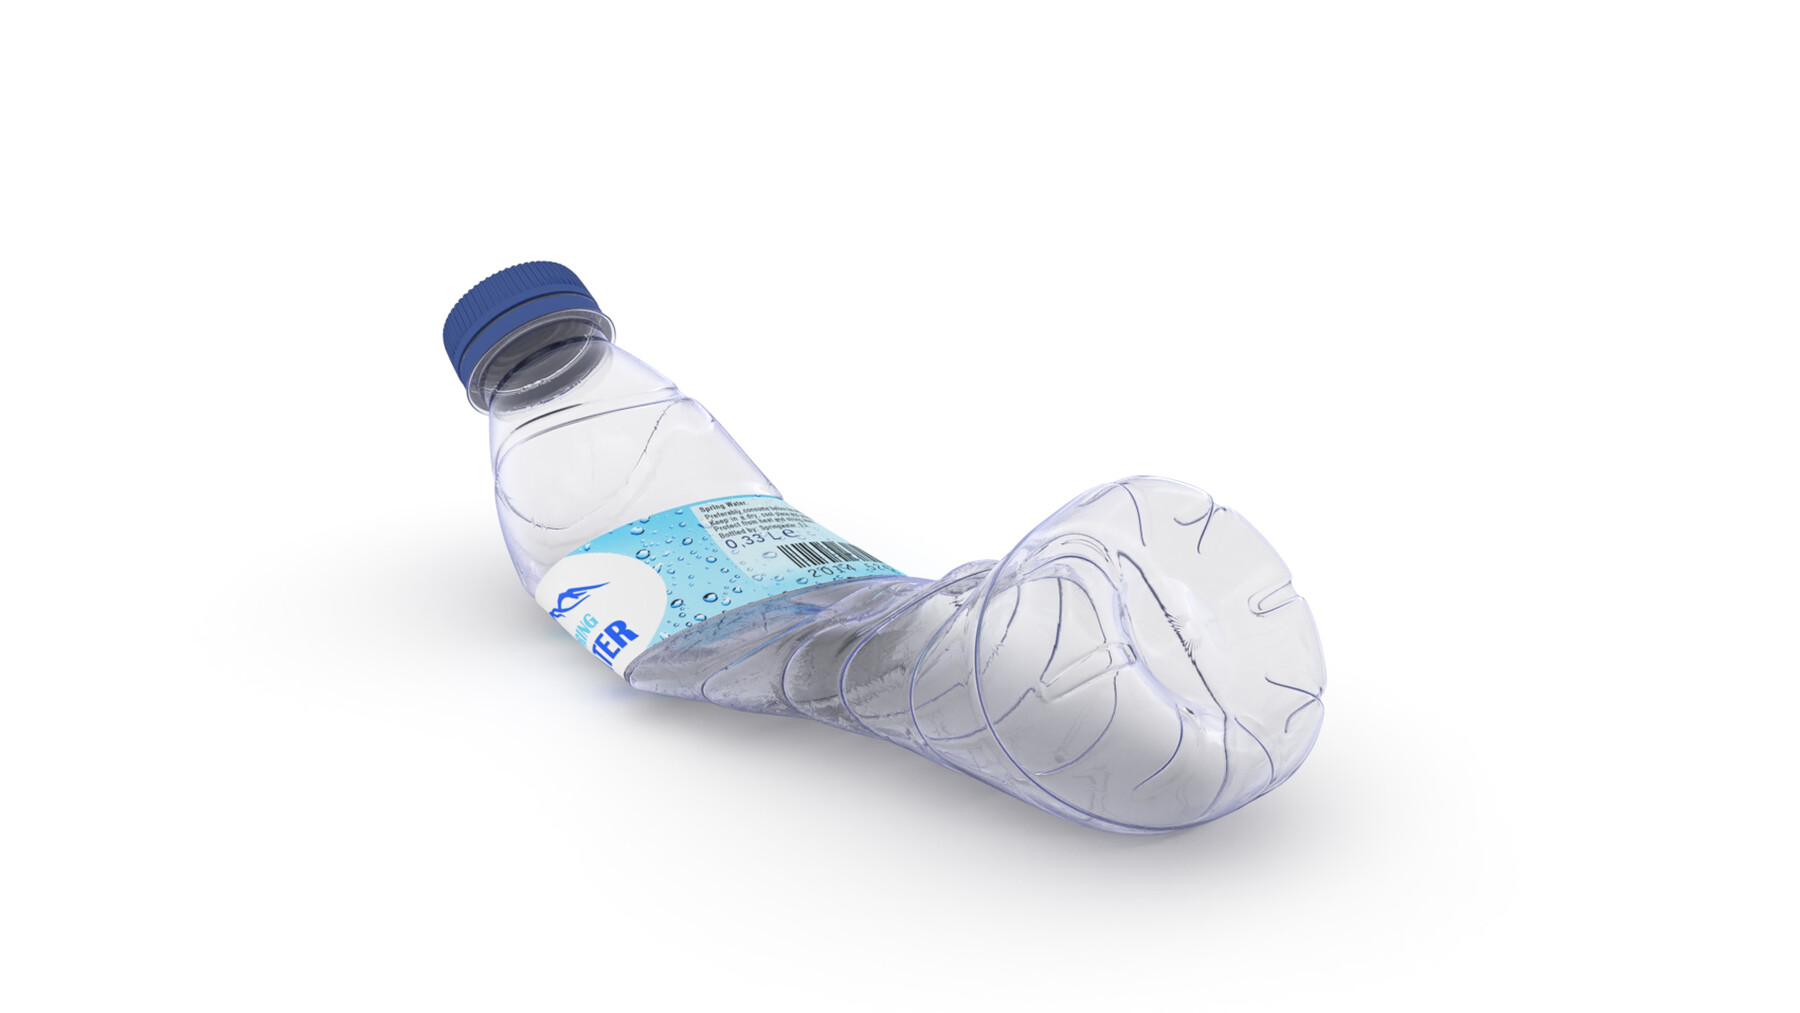 Plastic Water Bottle - 3D Model by Davor